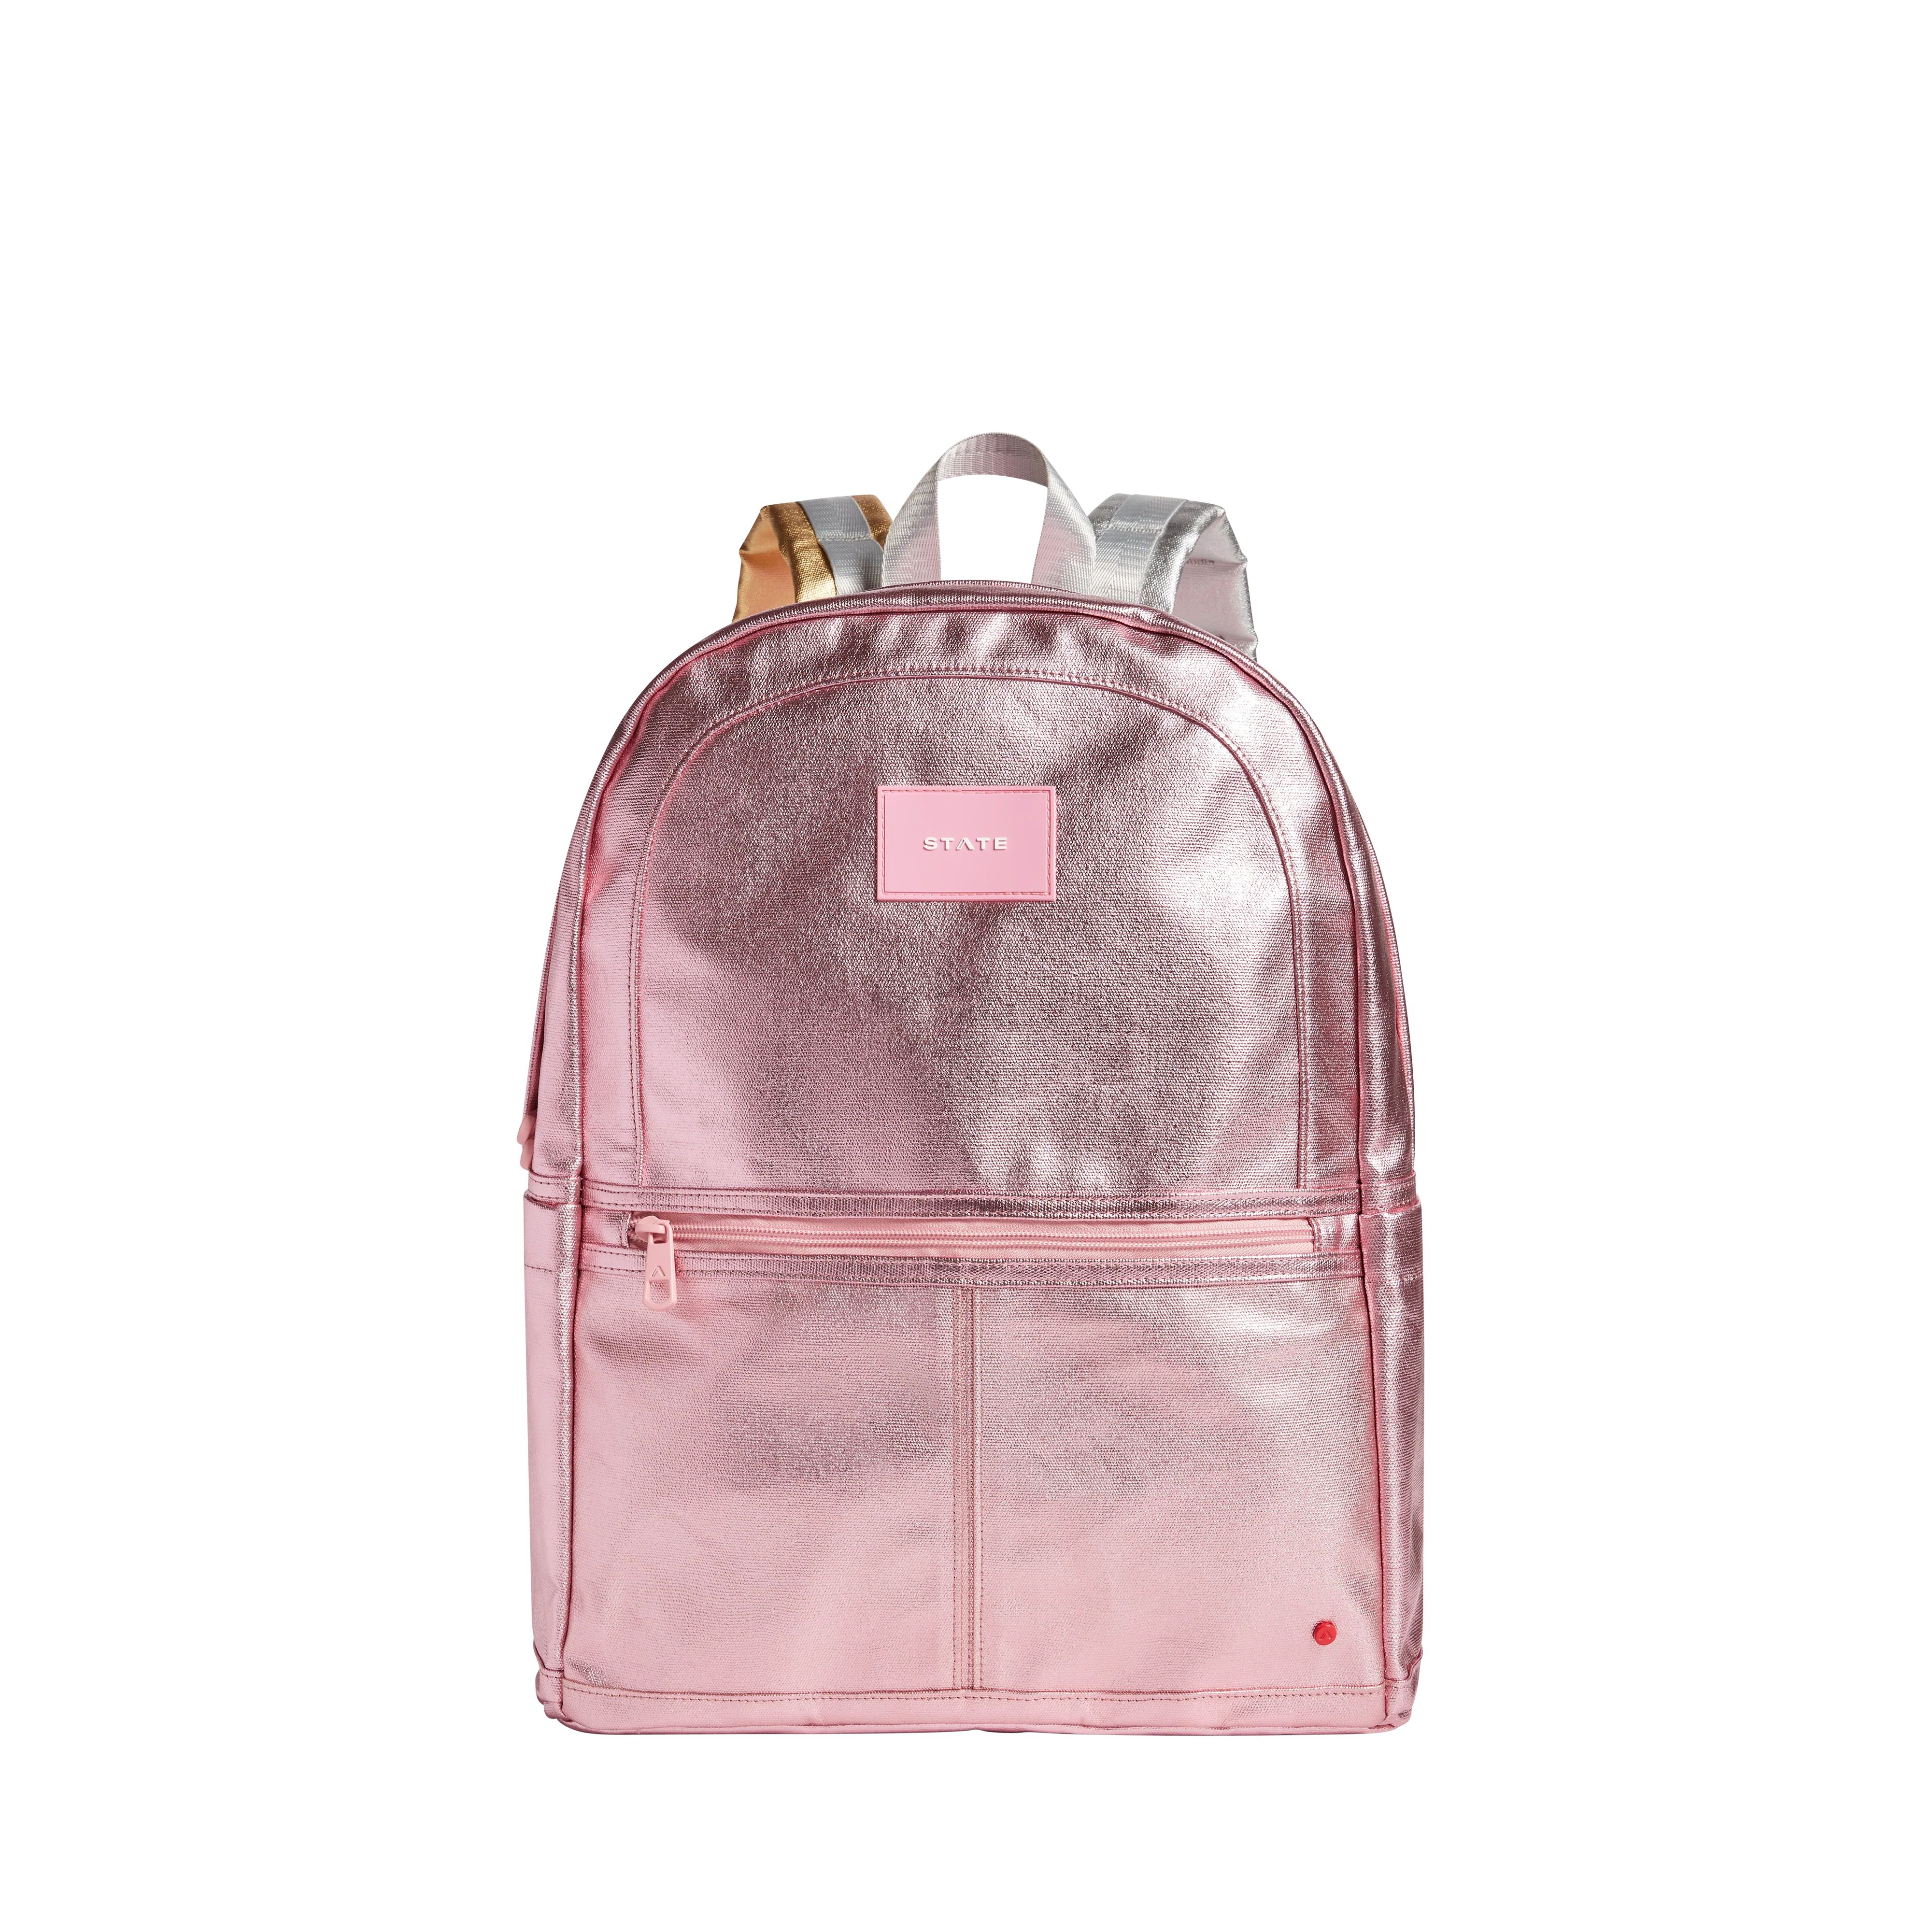 STATE Bags | Kane Kids Large Backpack Metallic Pink/Silver | STATE Bags